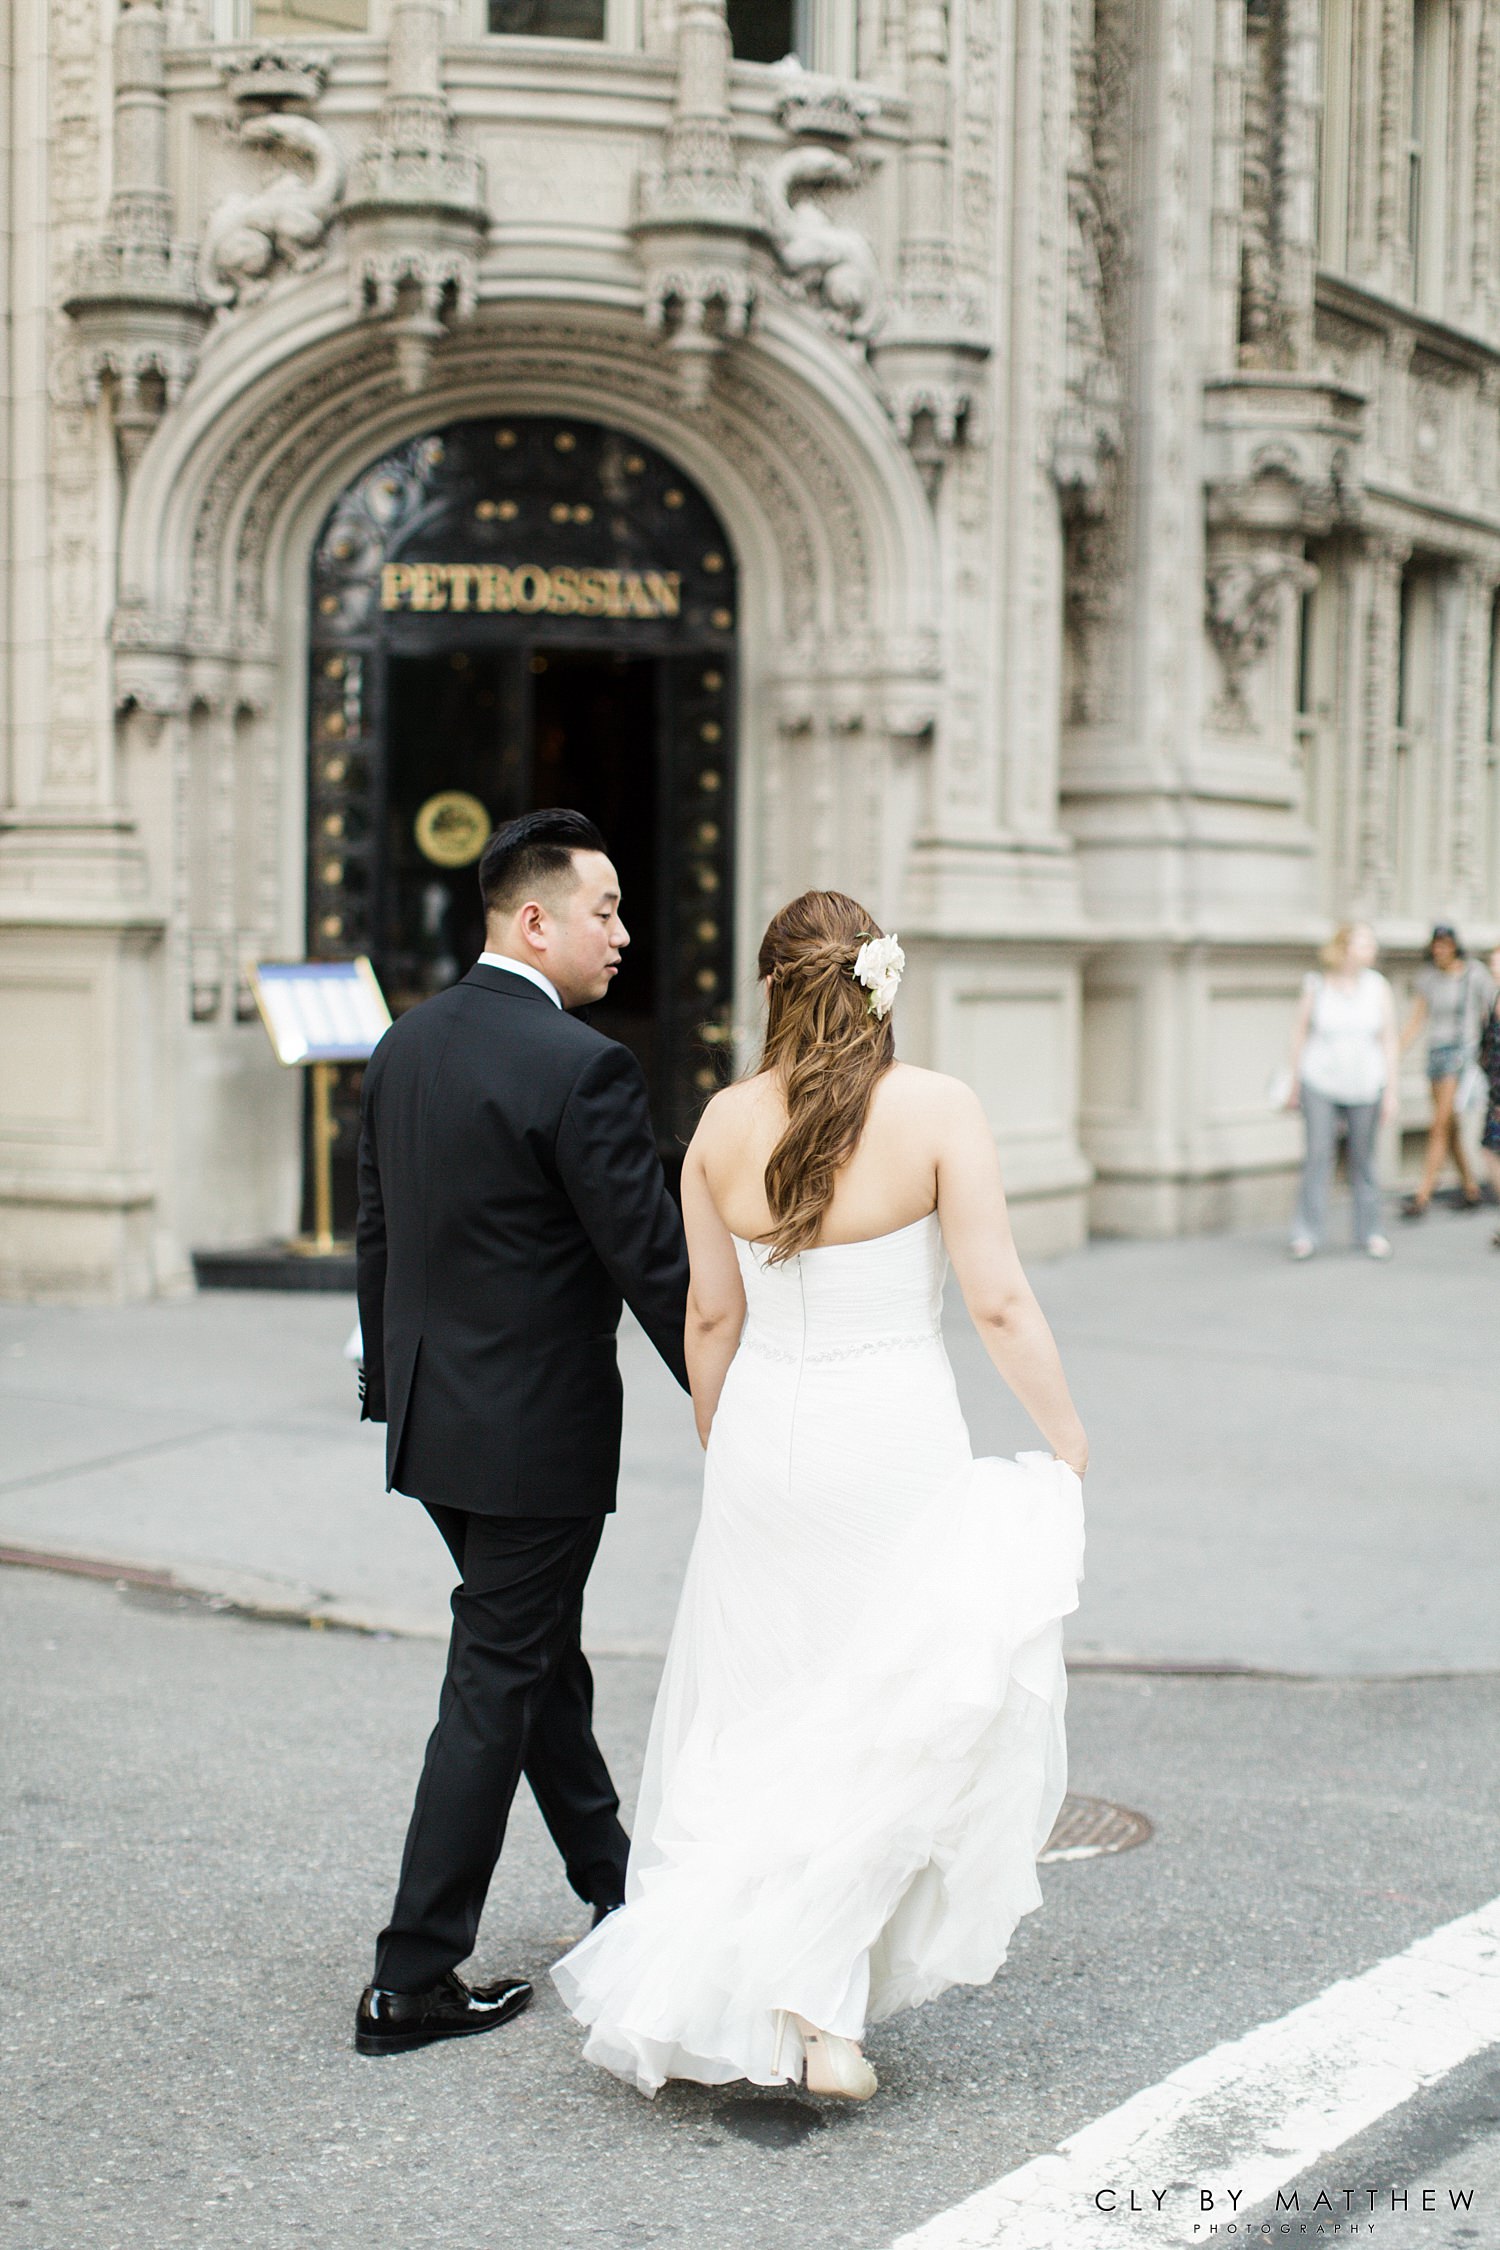 Spring wedding at the Park Hyatt Hotel in NYC via Jubilee Events